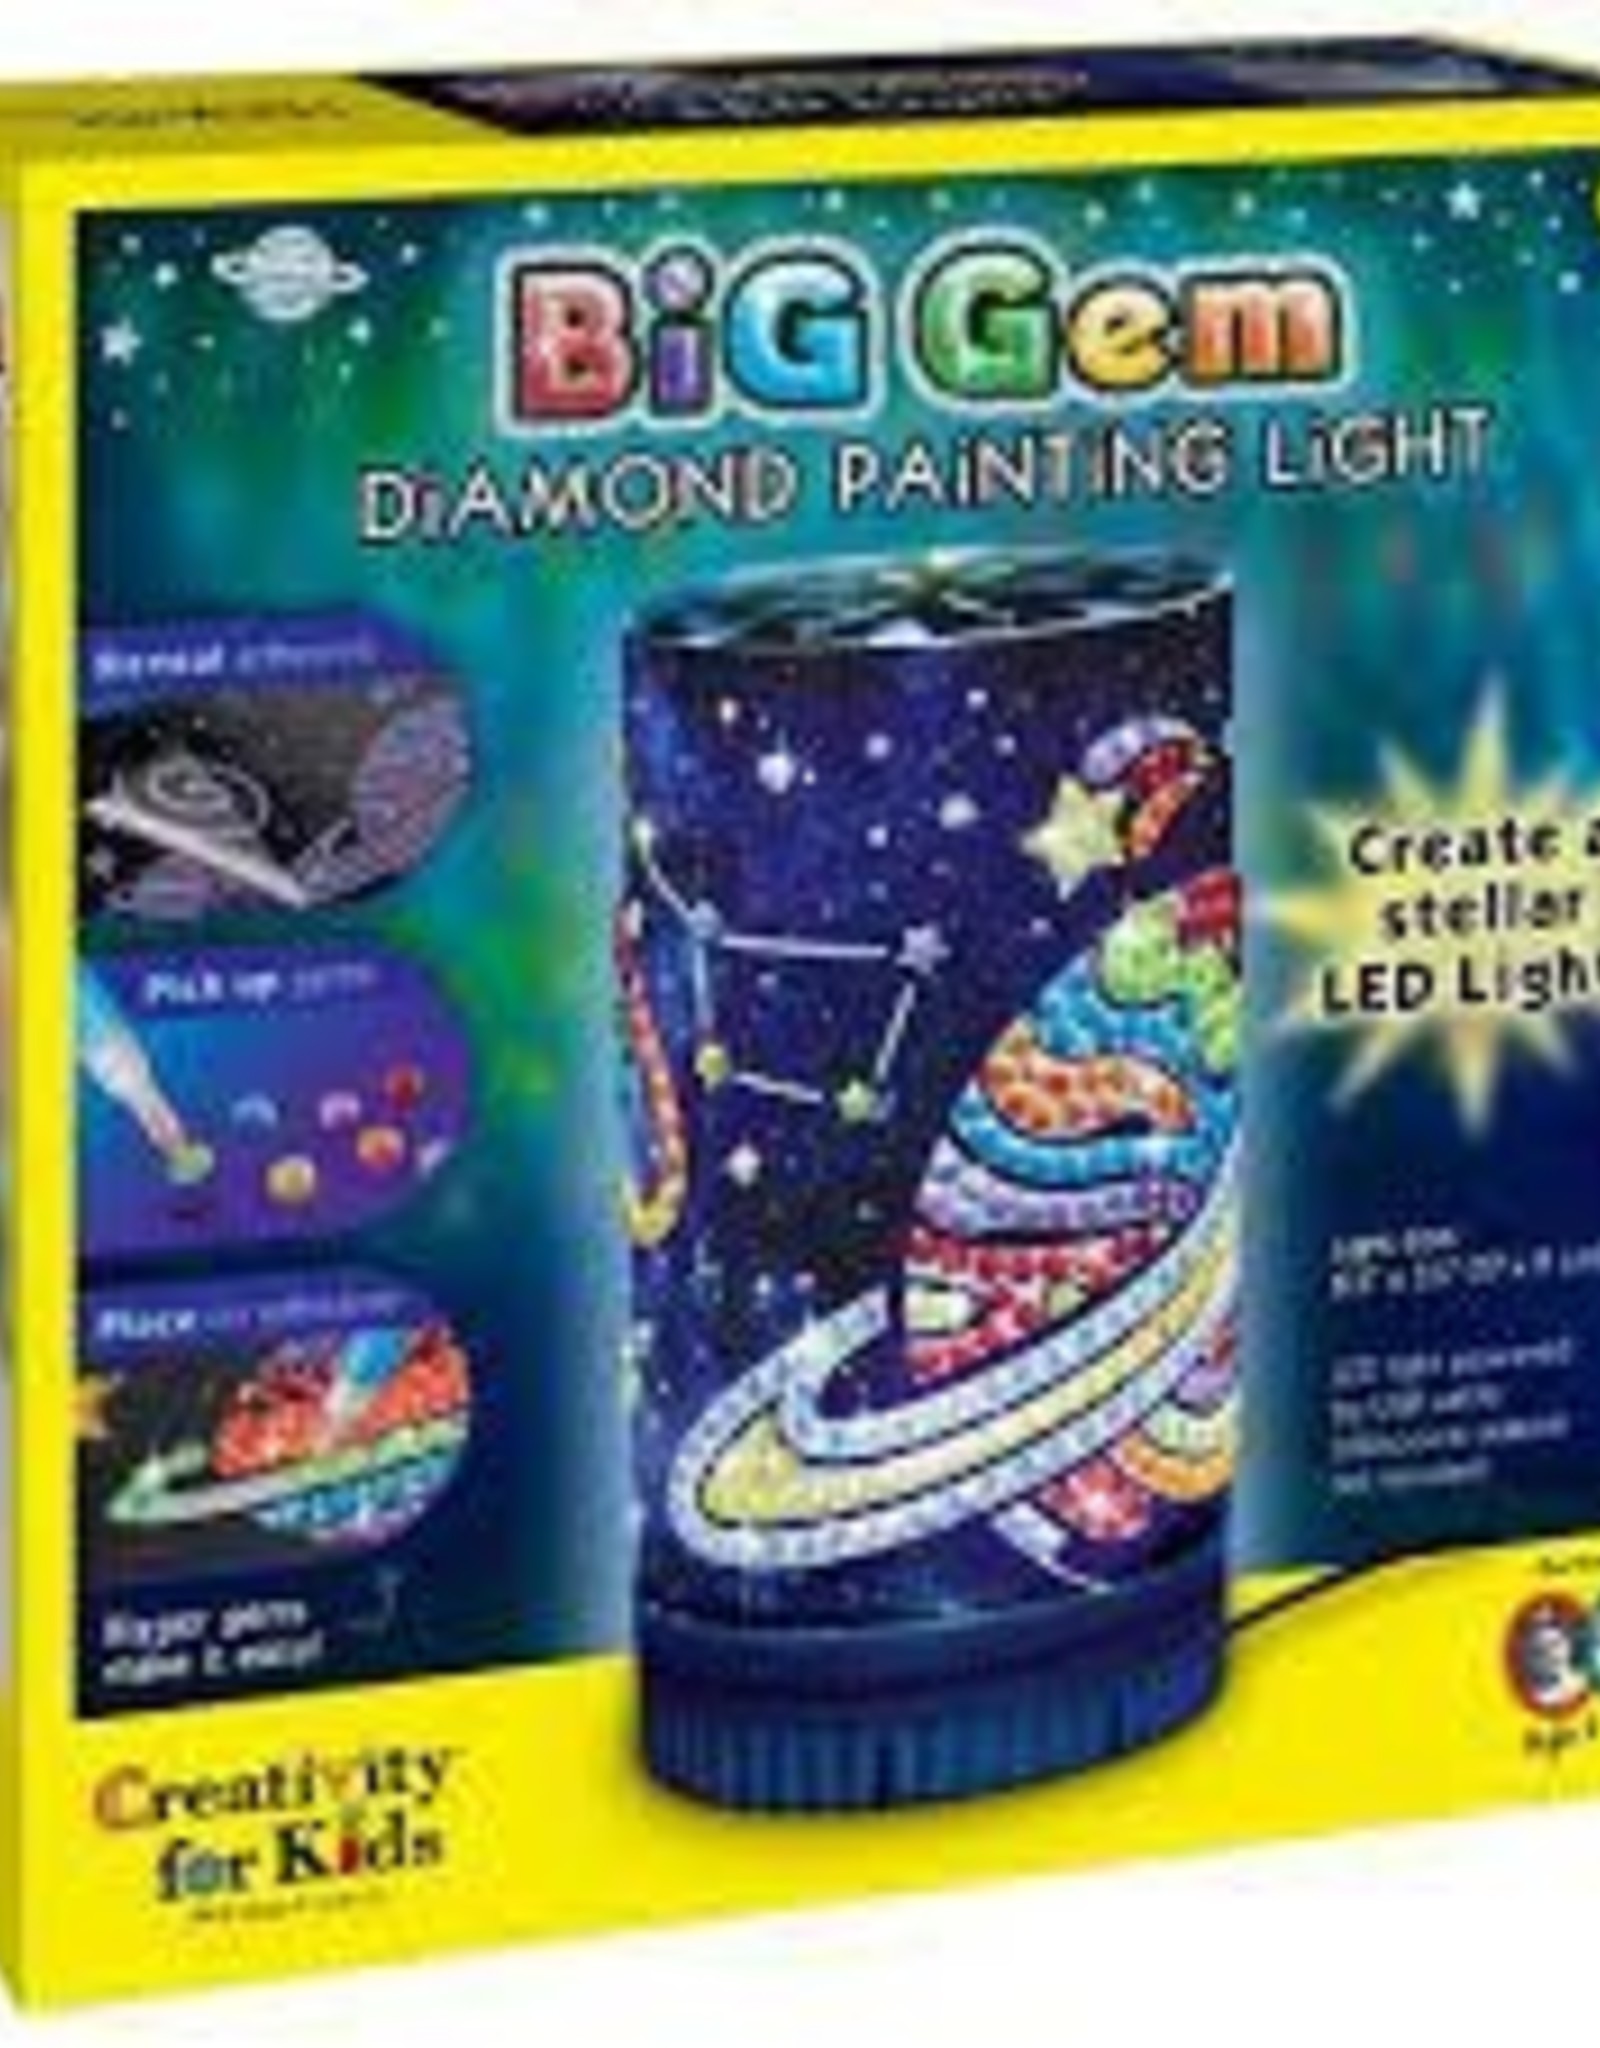 CREATIVITY FOR KIDS LIGHT BIG GEM diamond painting